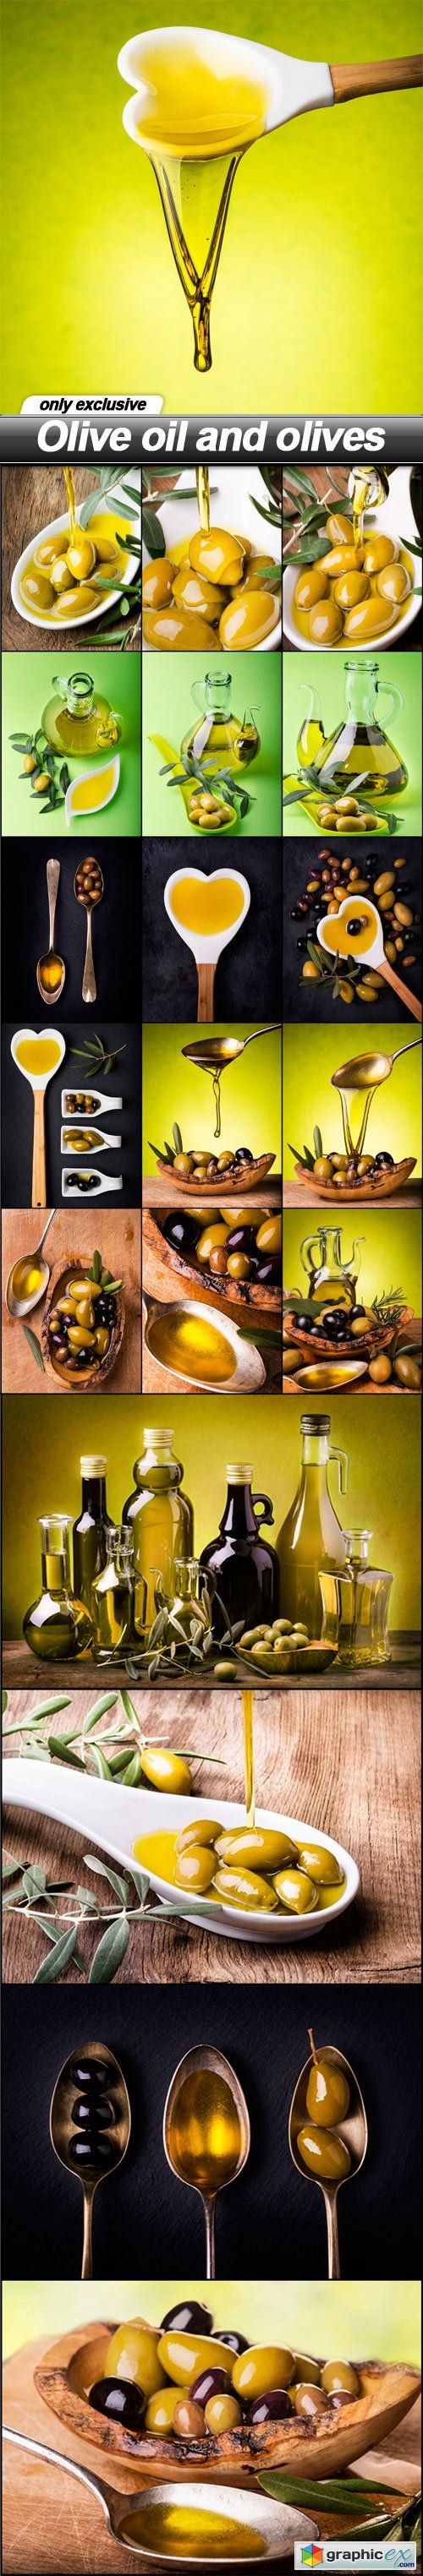 Olive oil and olives - 20 UHQ JPEG